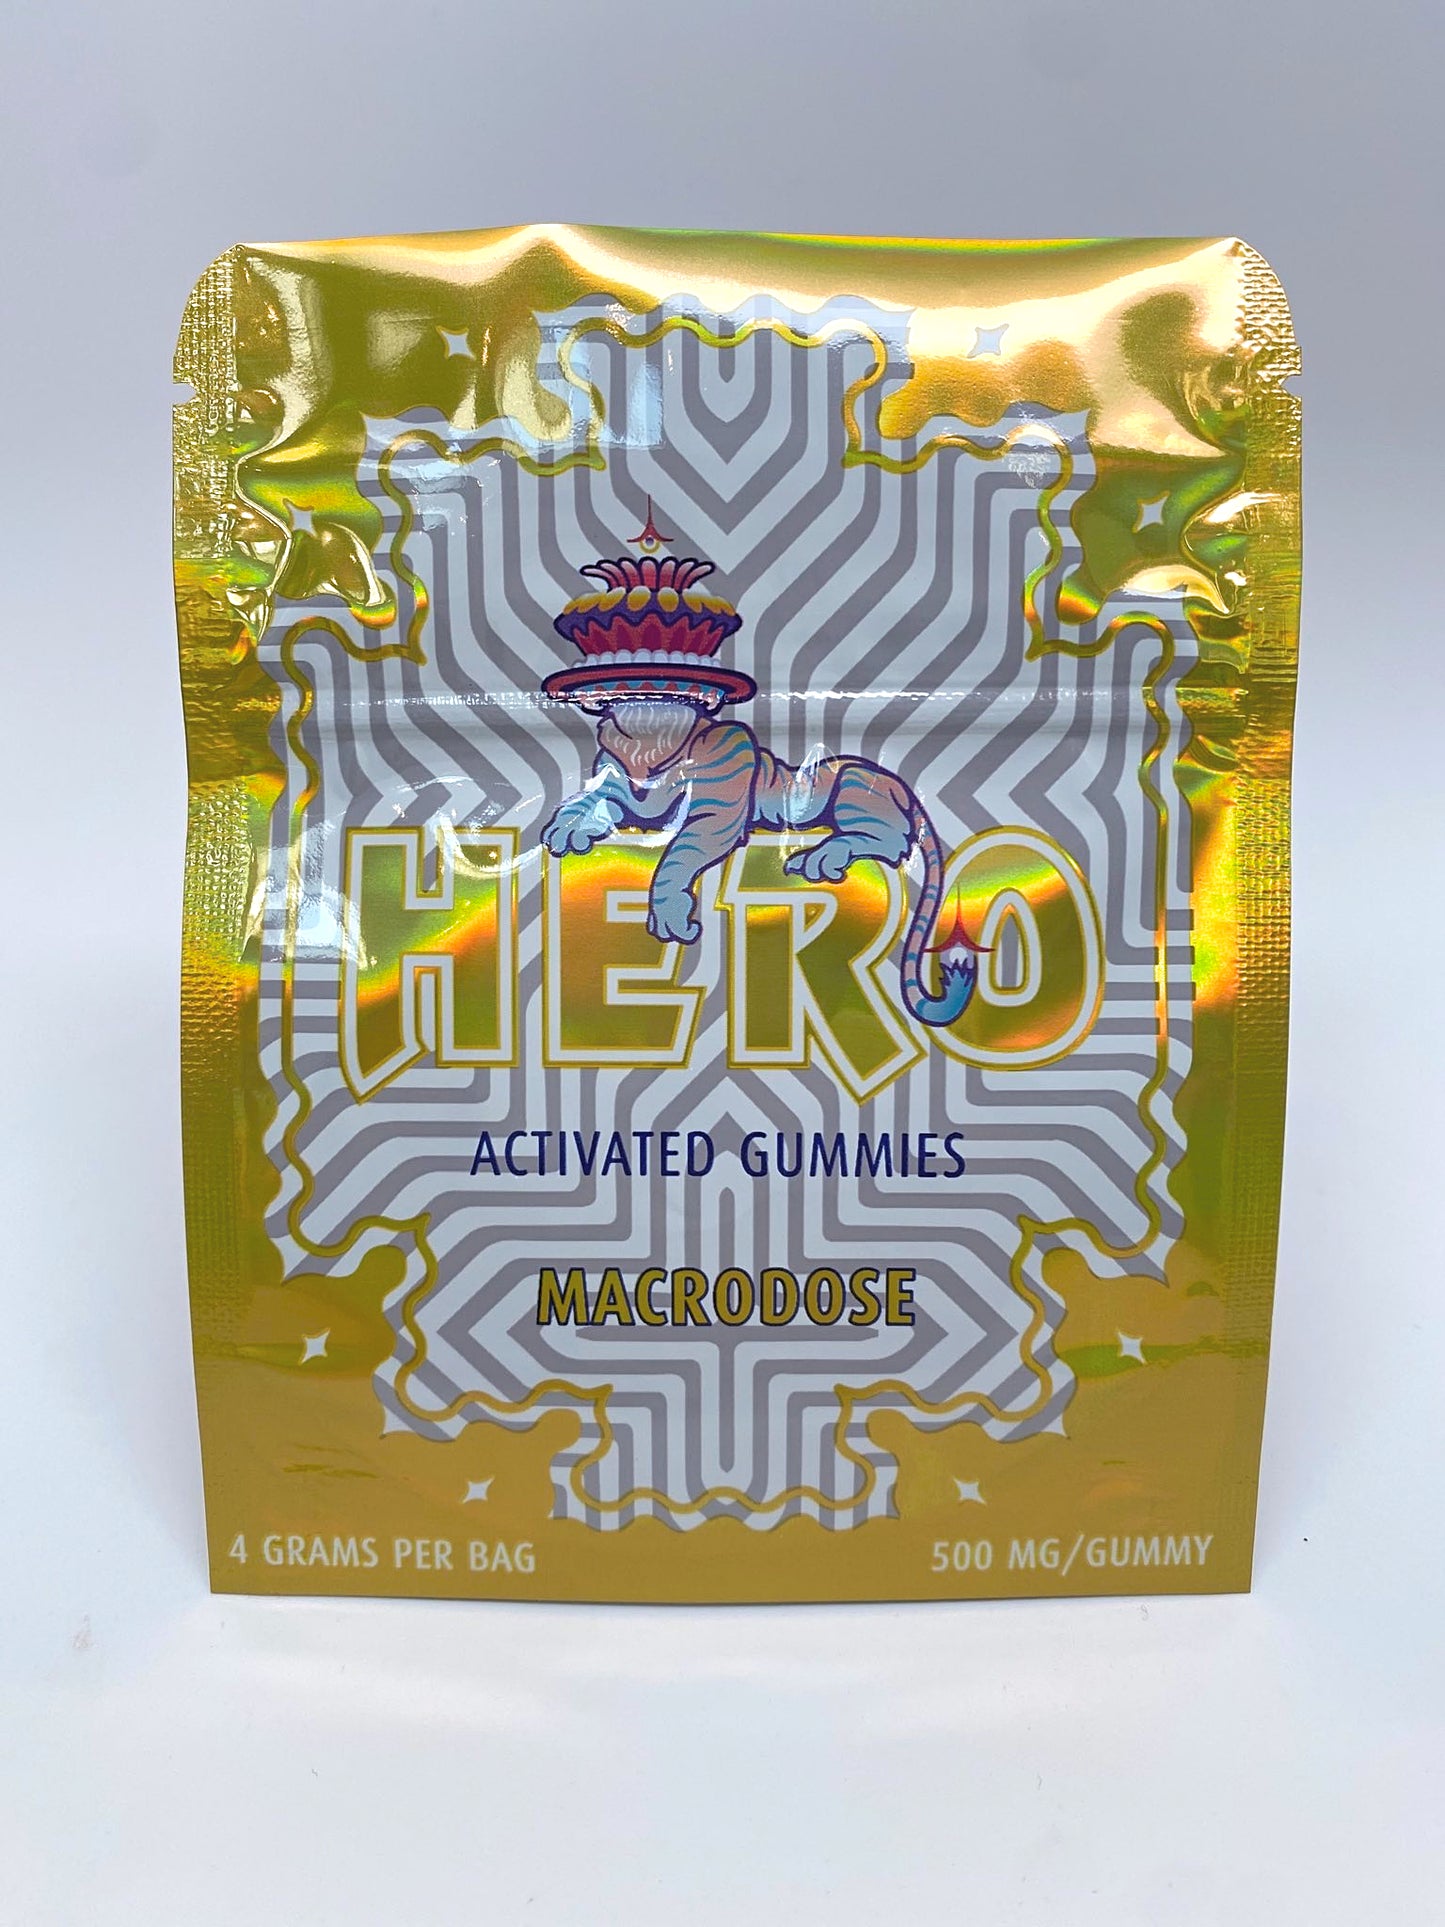 *New* HERO Macro Dose Gummies